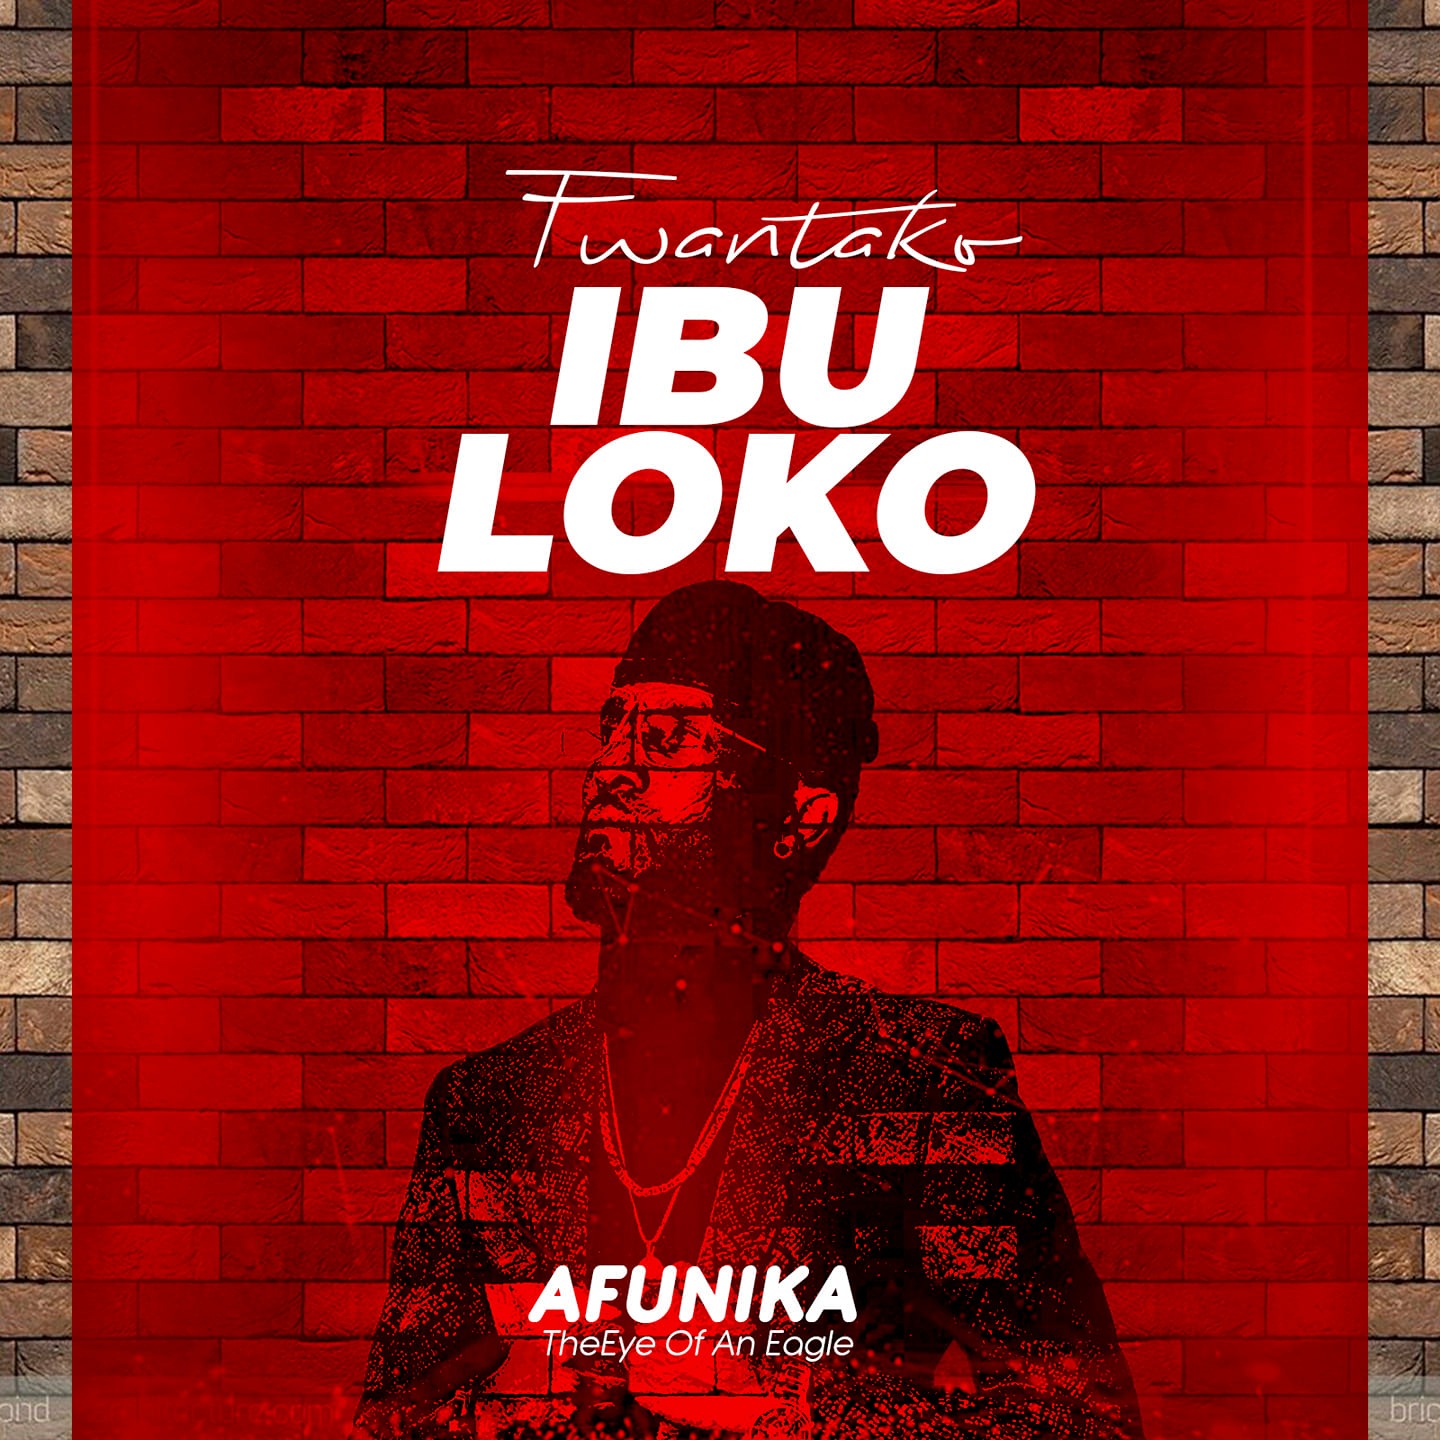 Afunika - Fwantako Ibu Loko | Mp3 Download